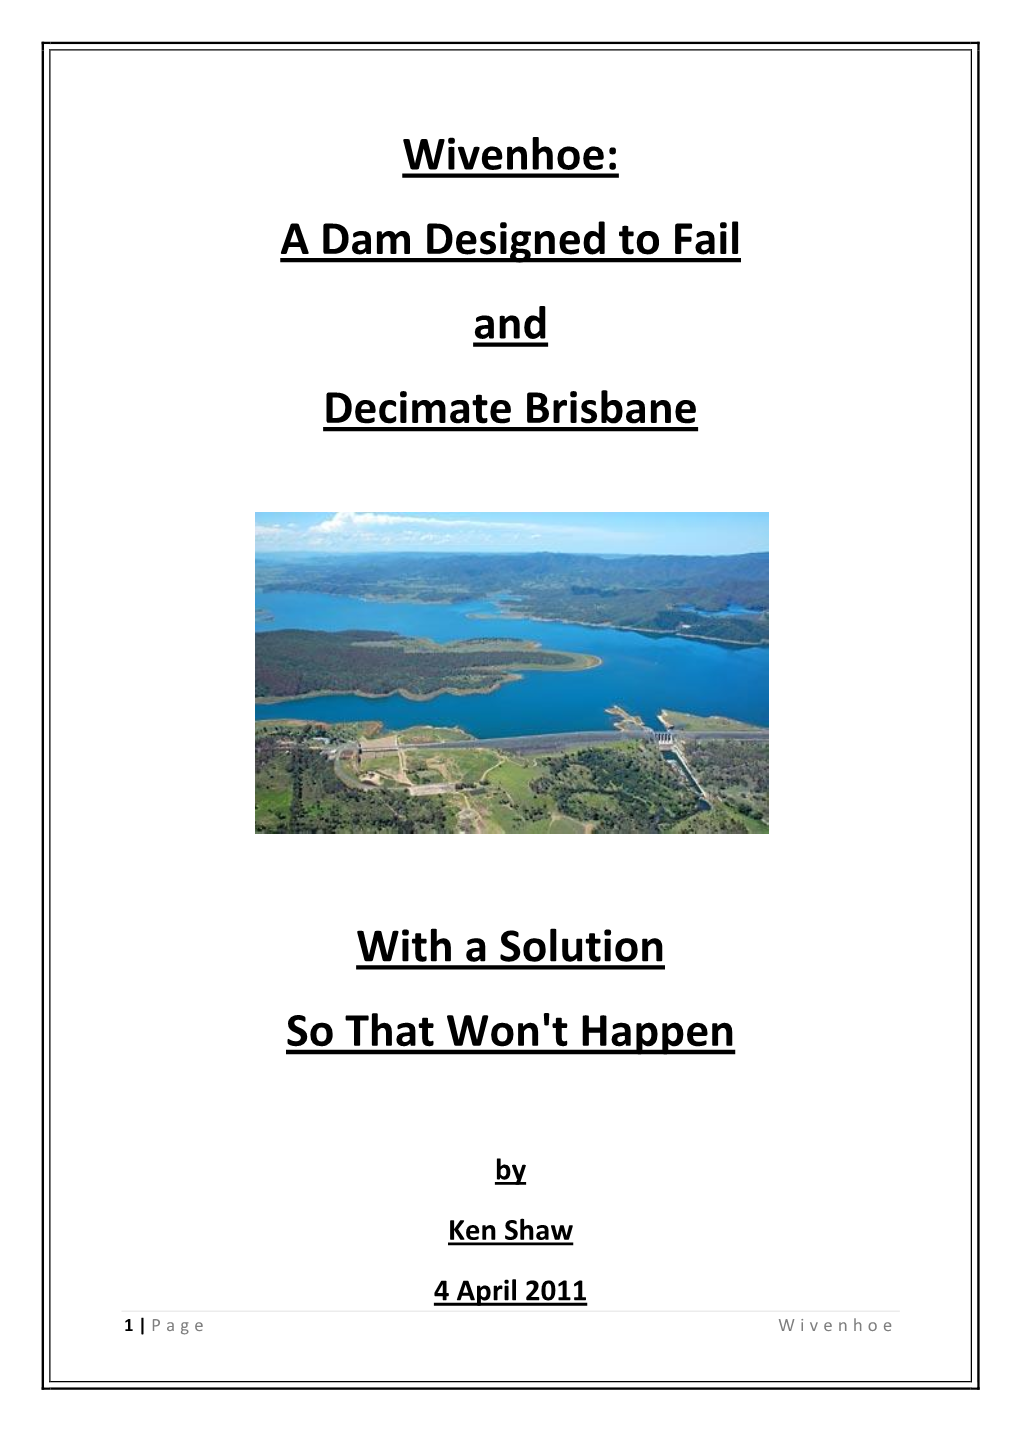 Wivenhoe: a Dam Designed to Fail and Decimate Brisbane